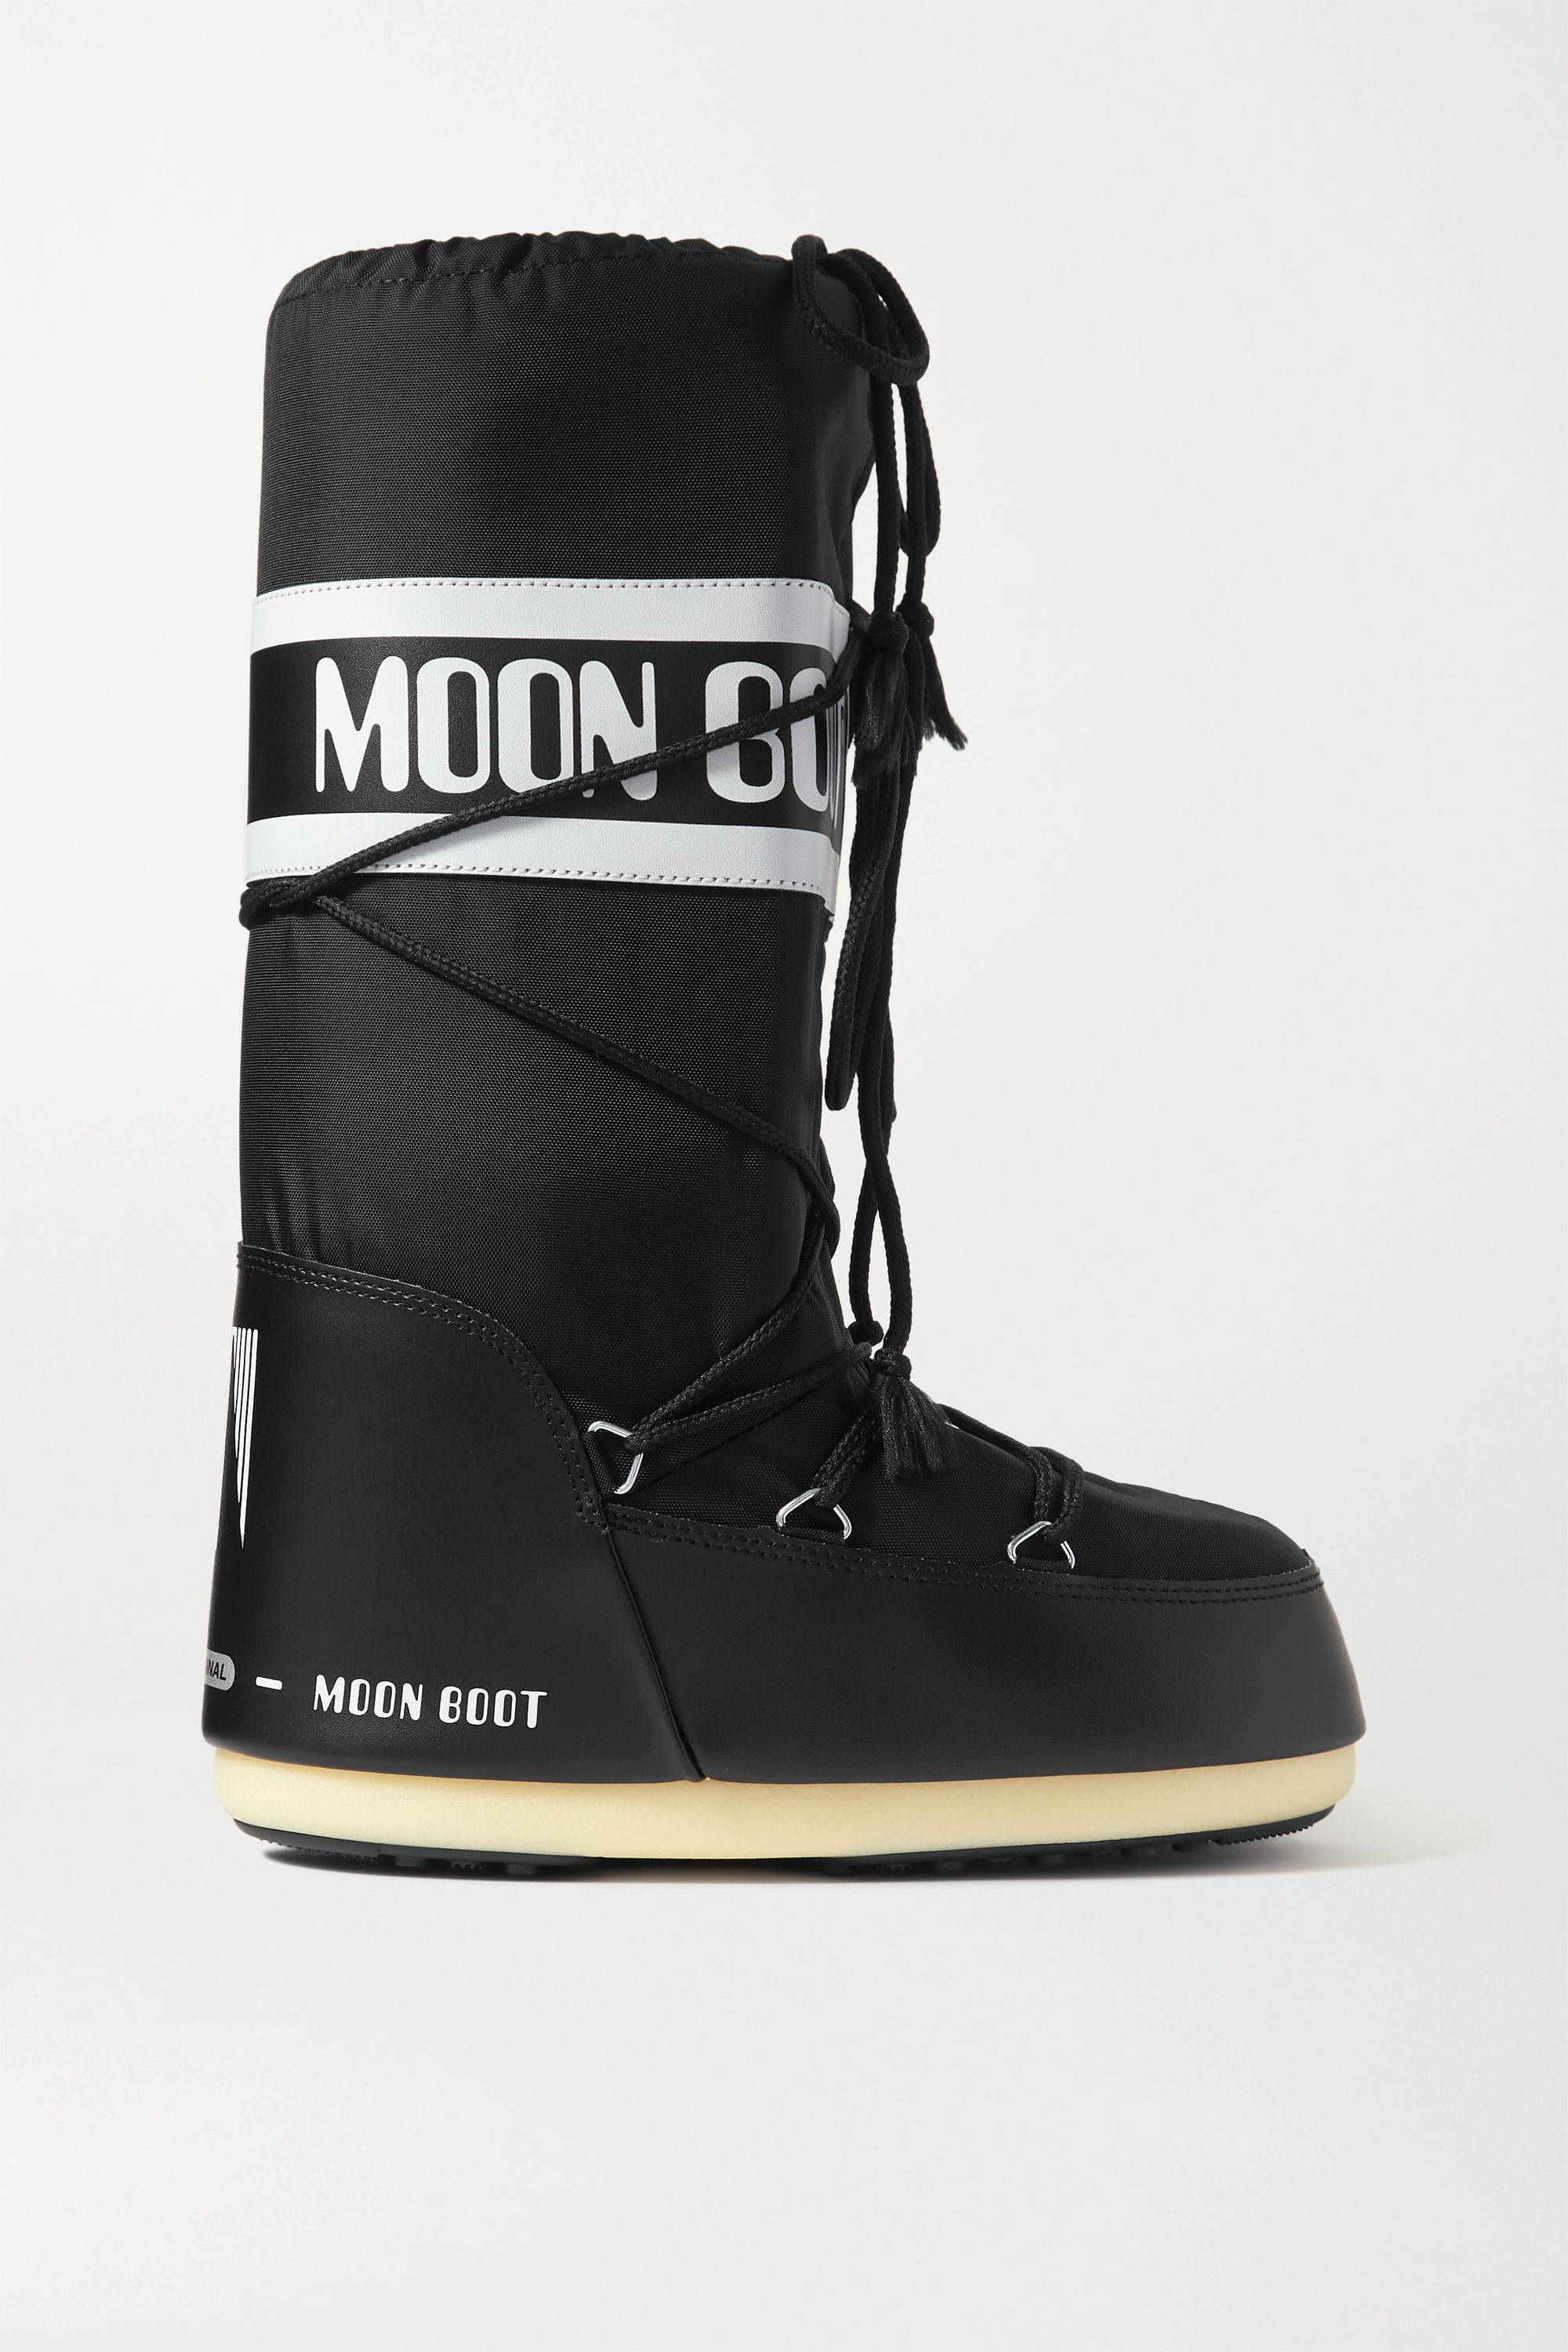 black friday moon boots